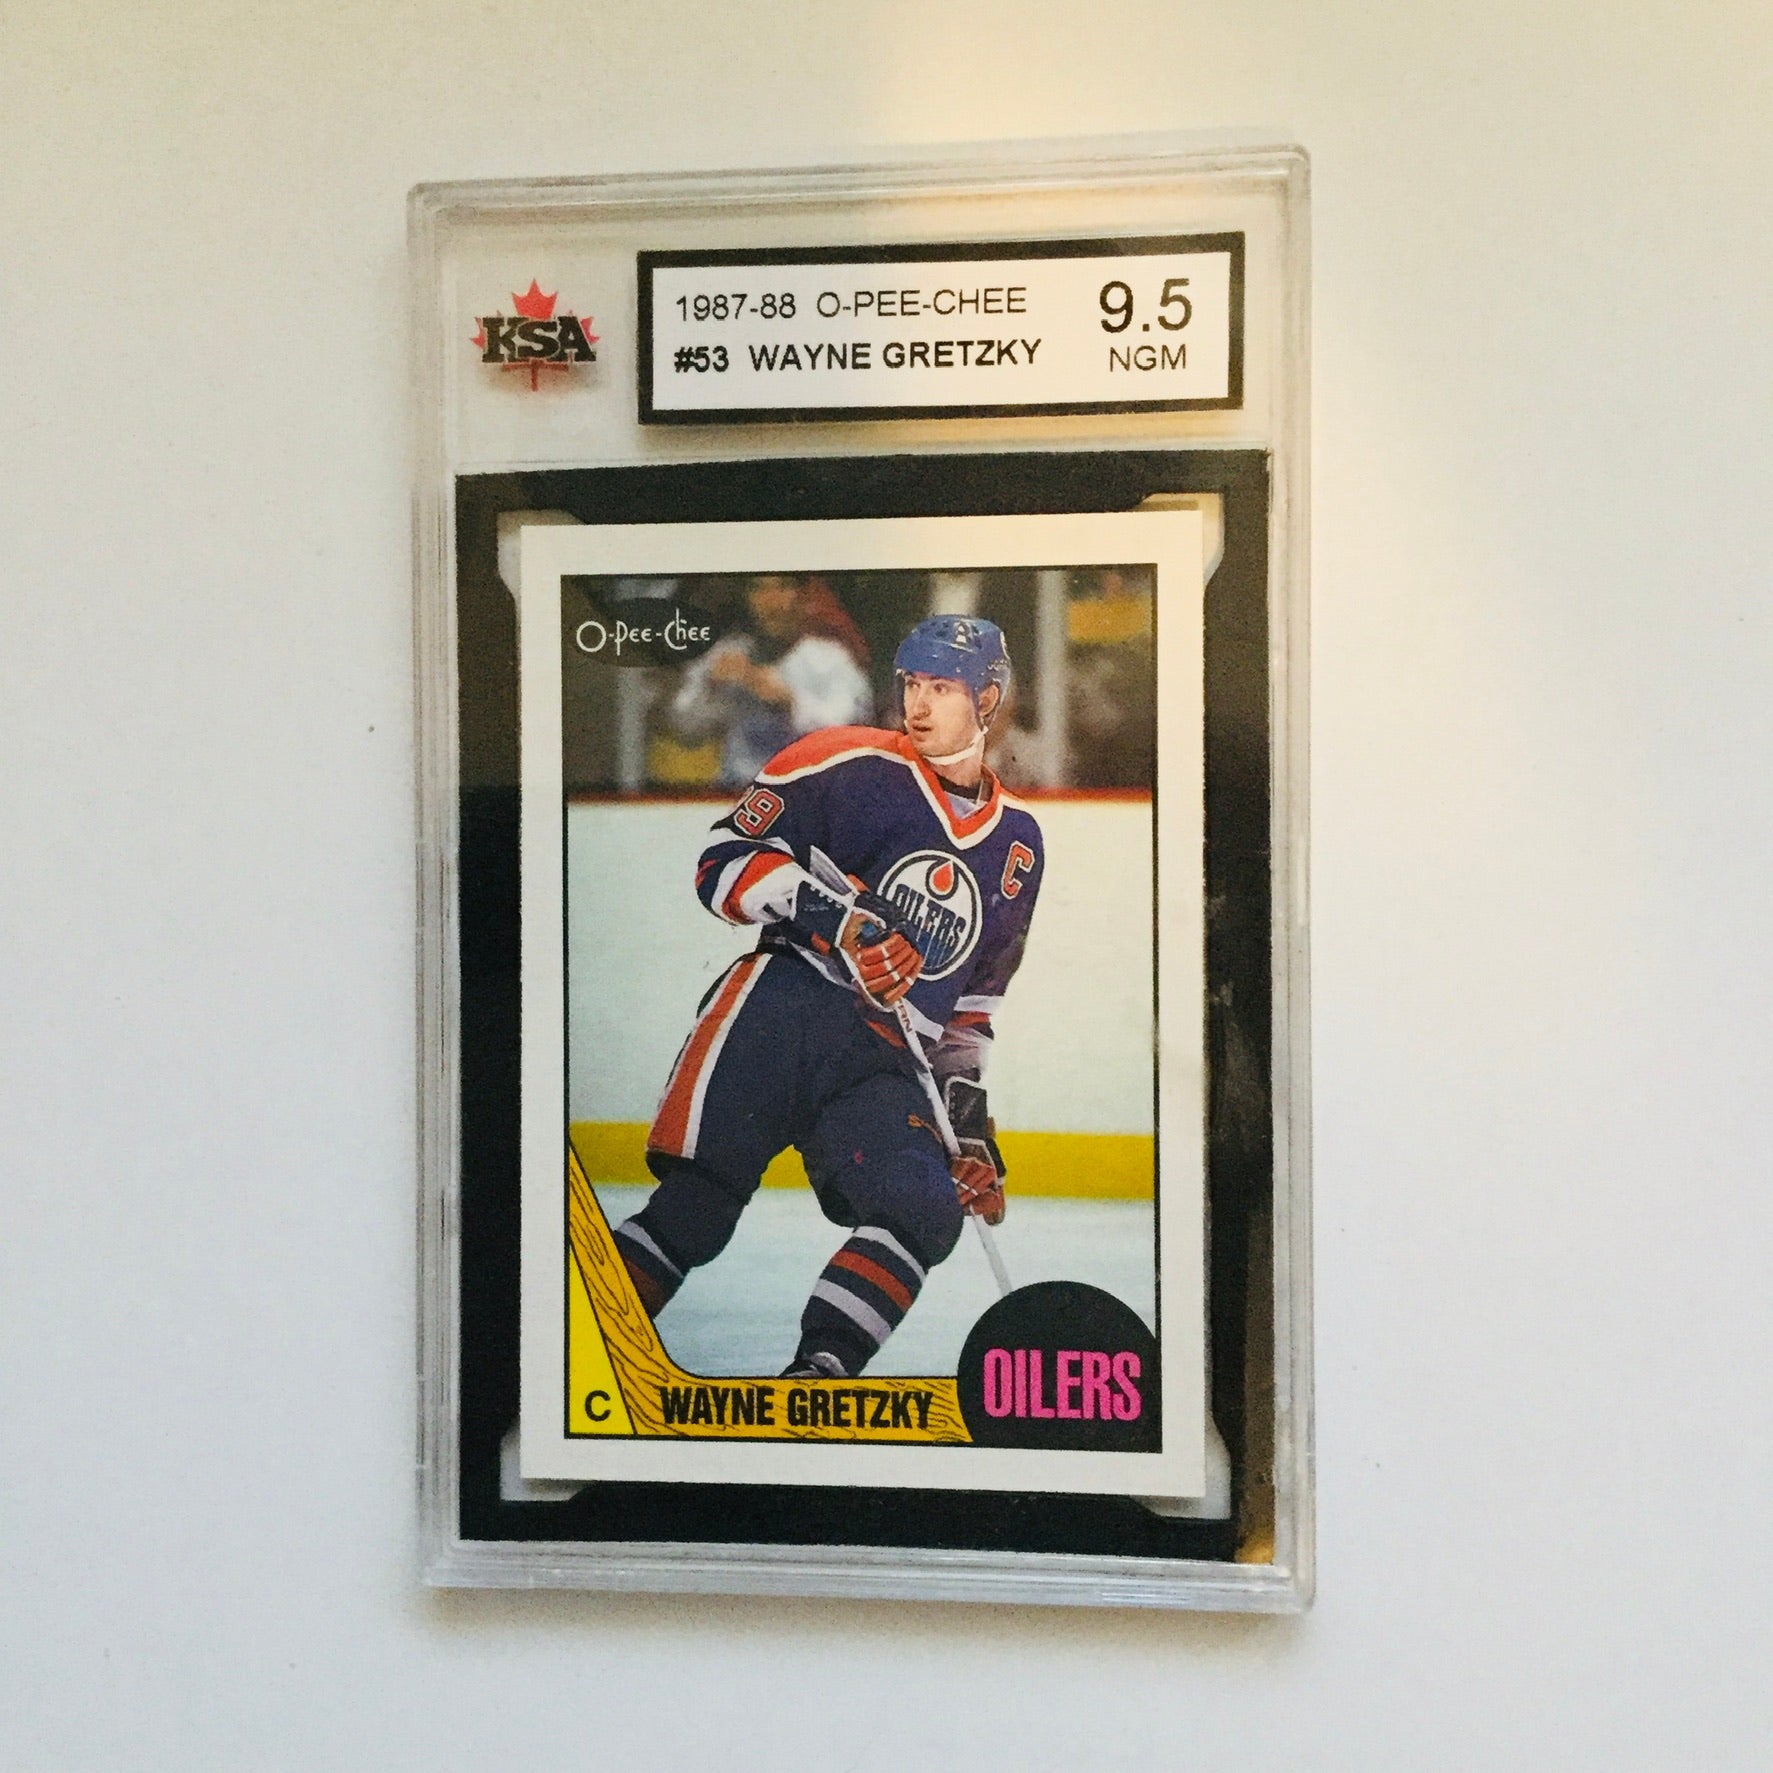 1987-88 Opc Wayne Gretzky high grade KSA 9.5 hockey Card